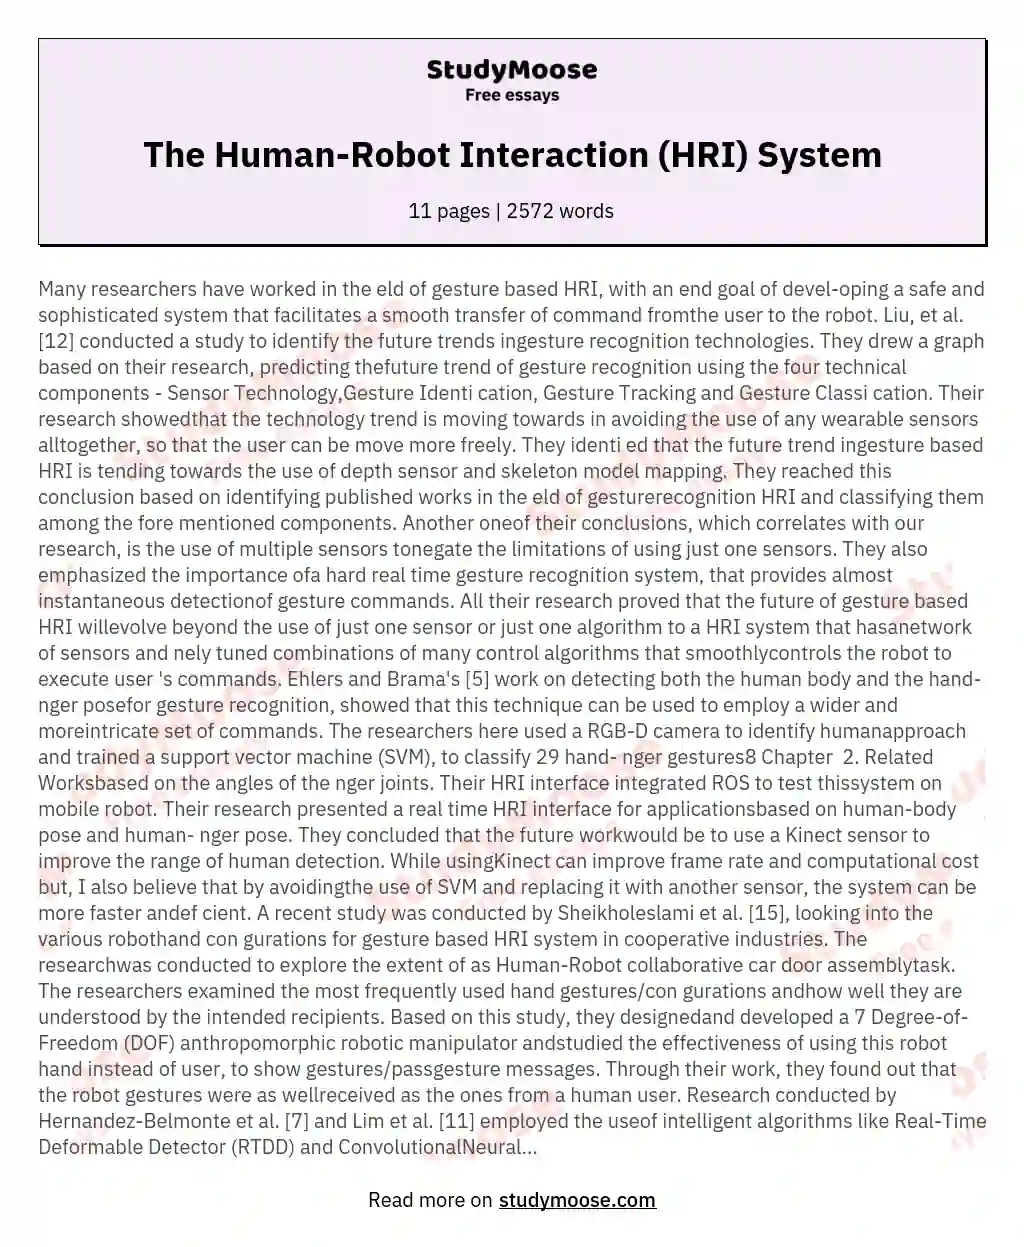 The Human-Robot Interaction (HRI) System essay